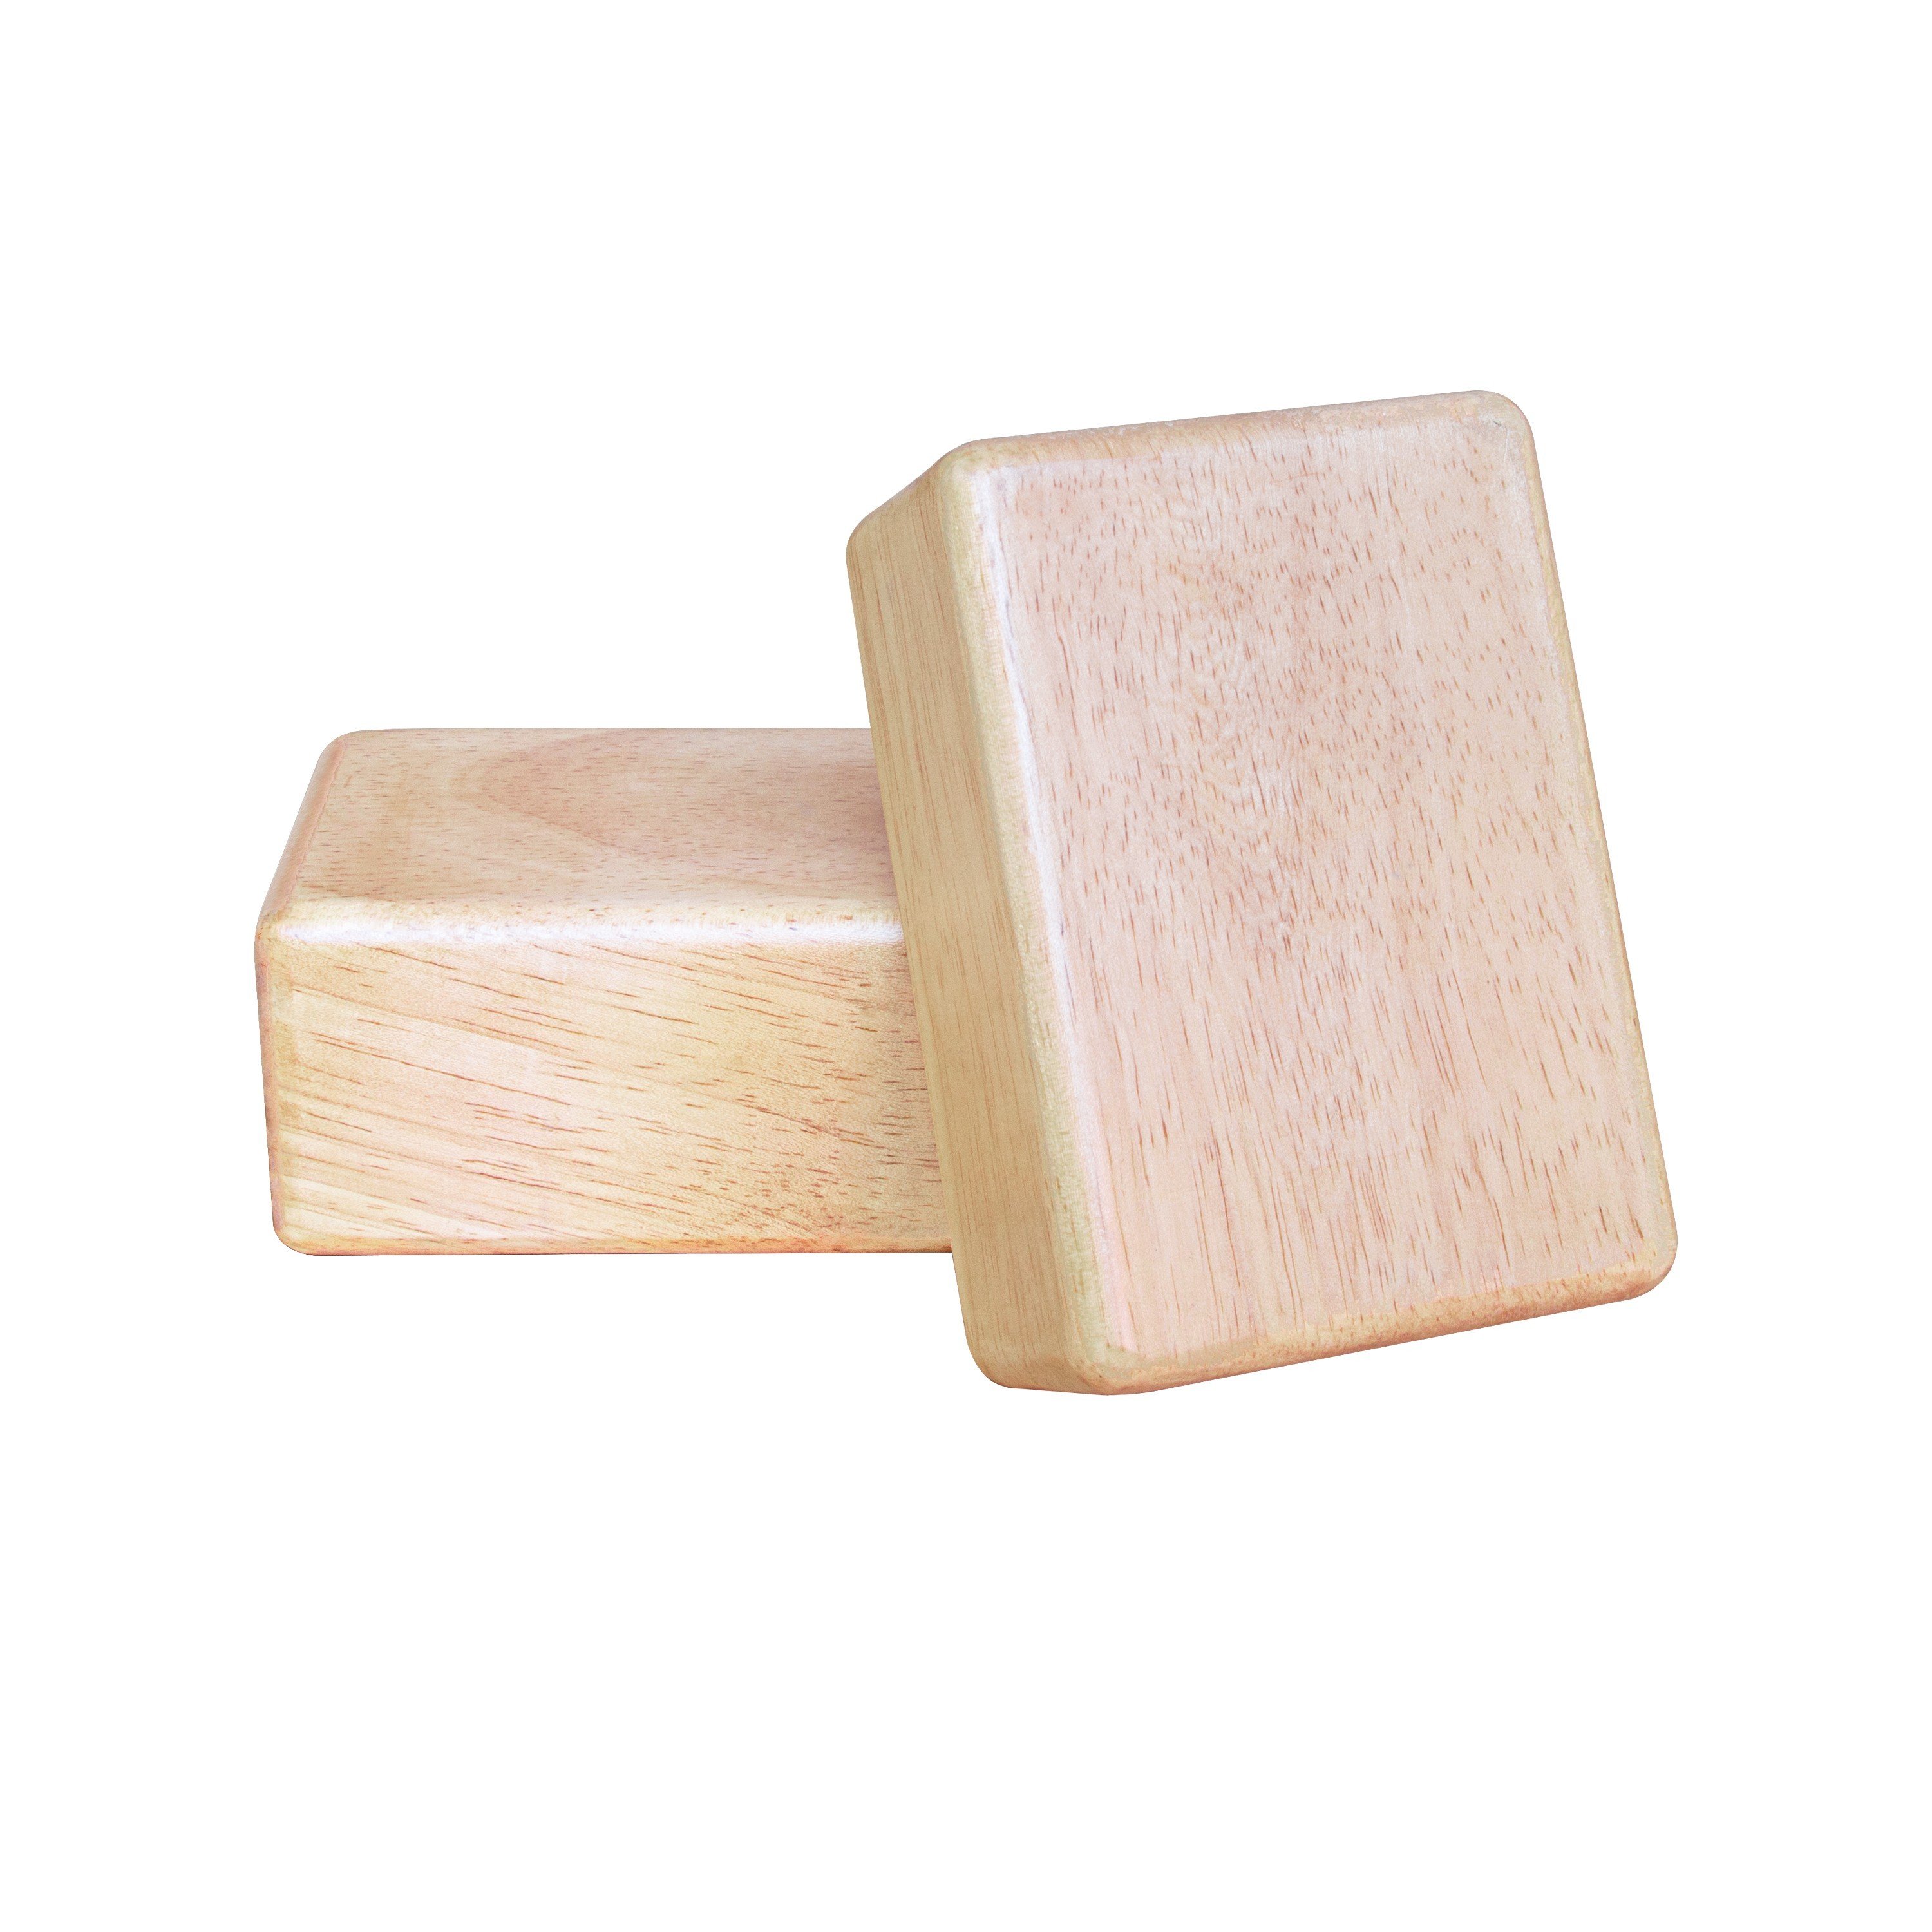 Gạch tập Handstand bằng gỗ dày 6cm, Block Handstand gỗ Pocorrys HSB-01